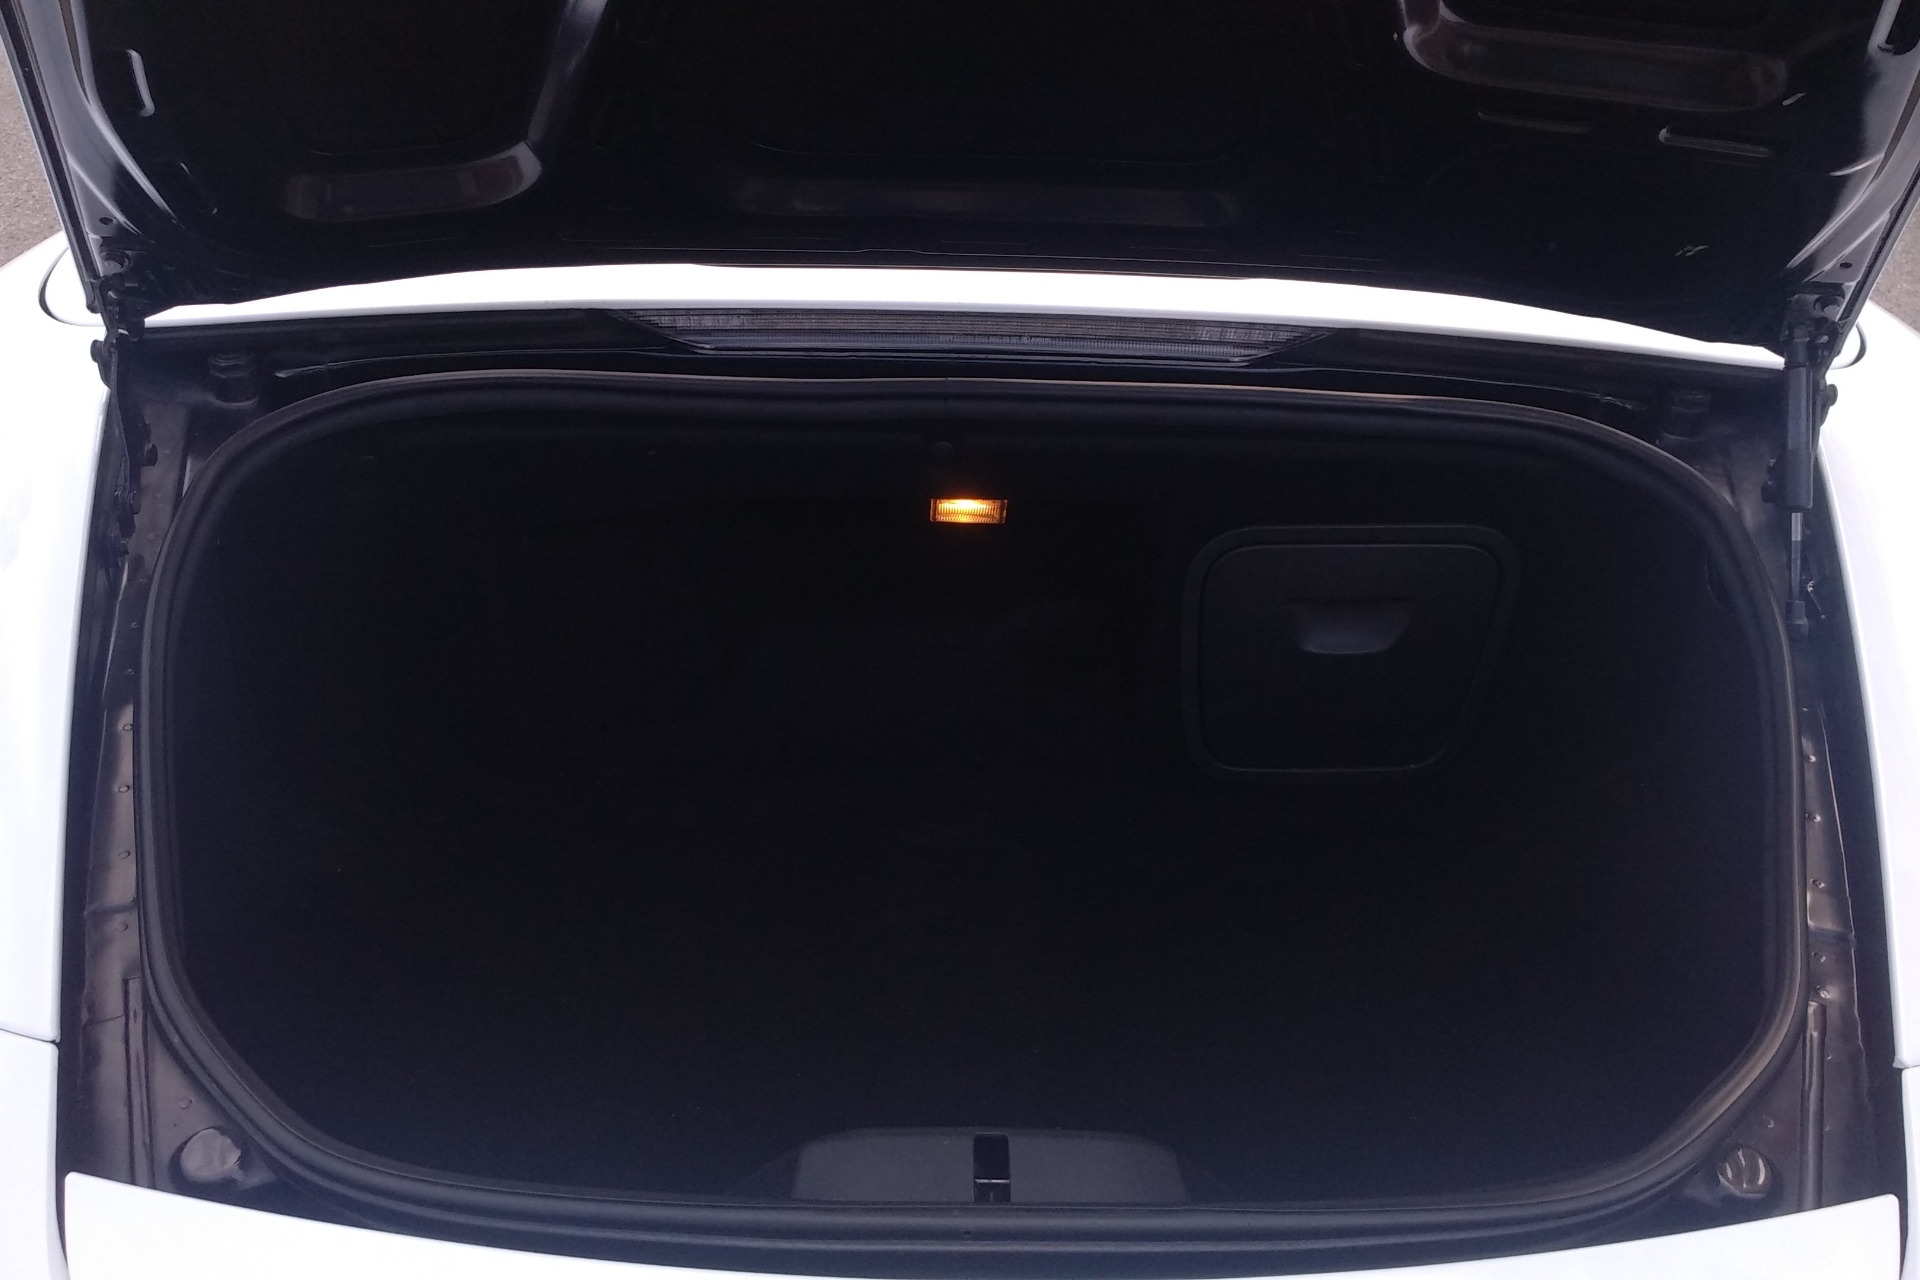 保时捷Boxster [进口] 2011款 2.9L 自动 Black-Edition 